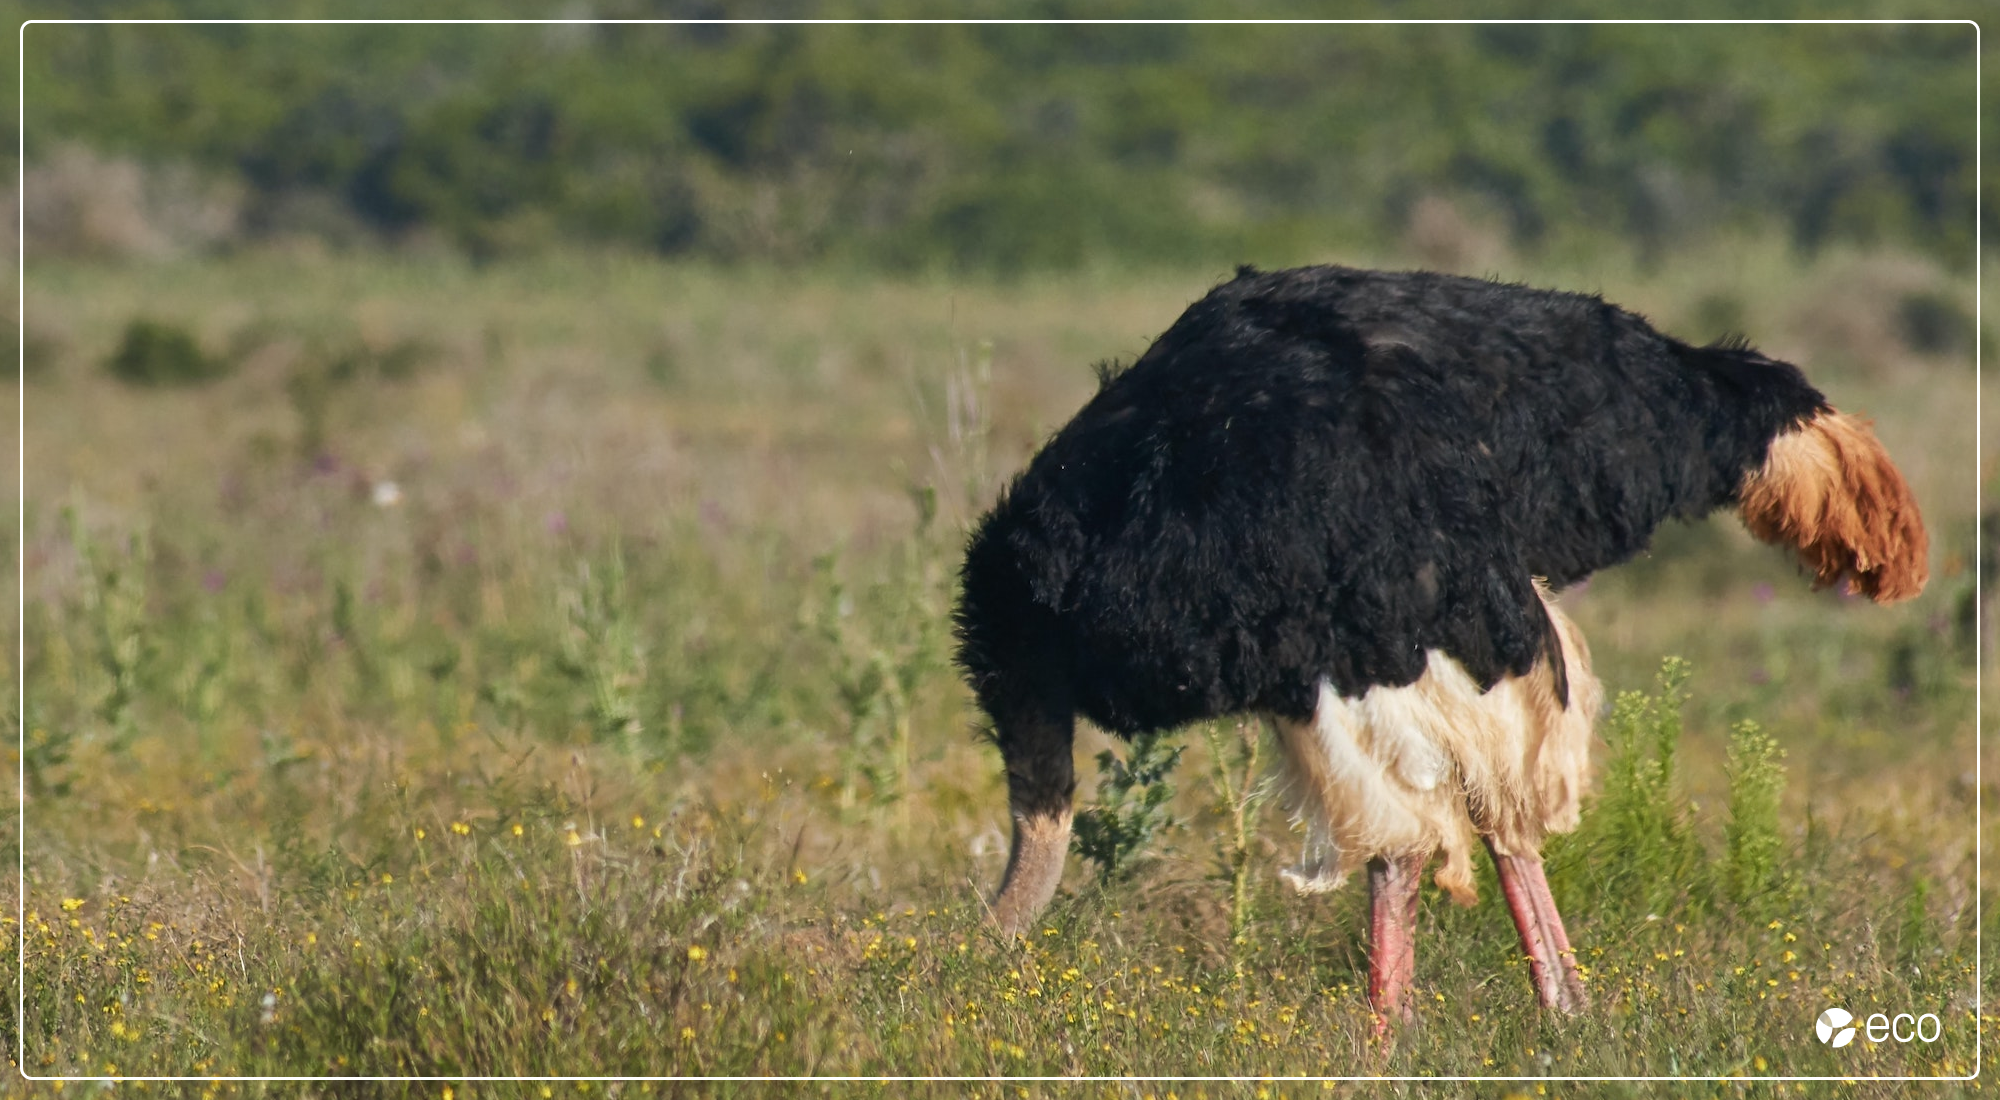 Ostrich sticking its head in the ground